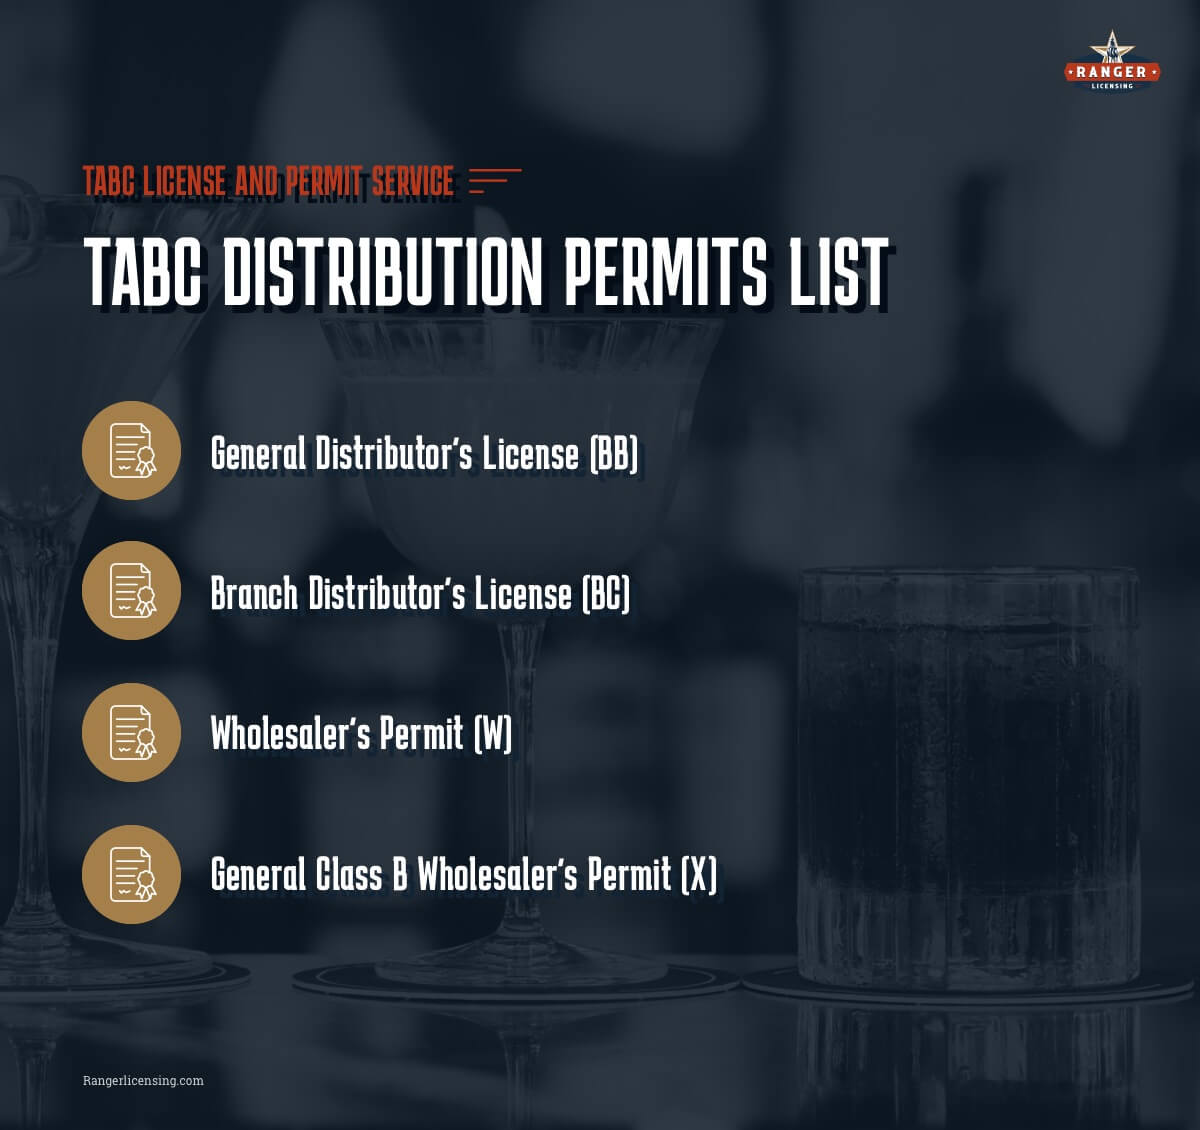 TABC Manufacturing Permits